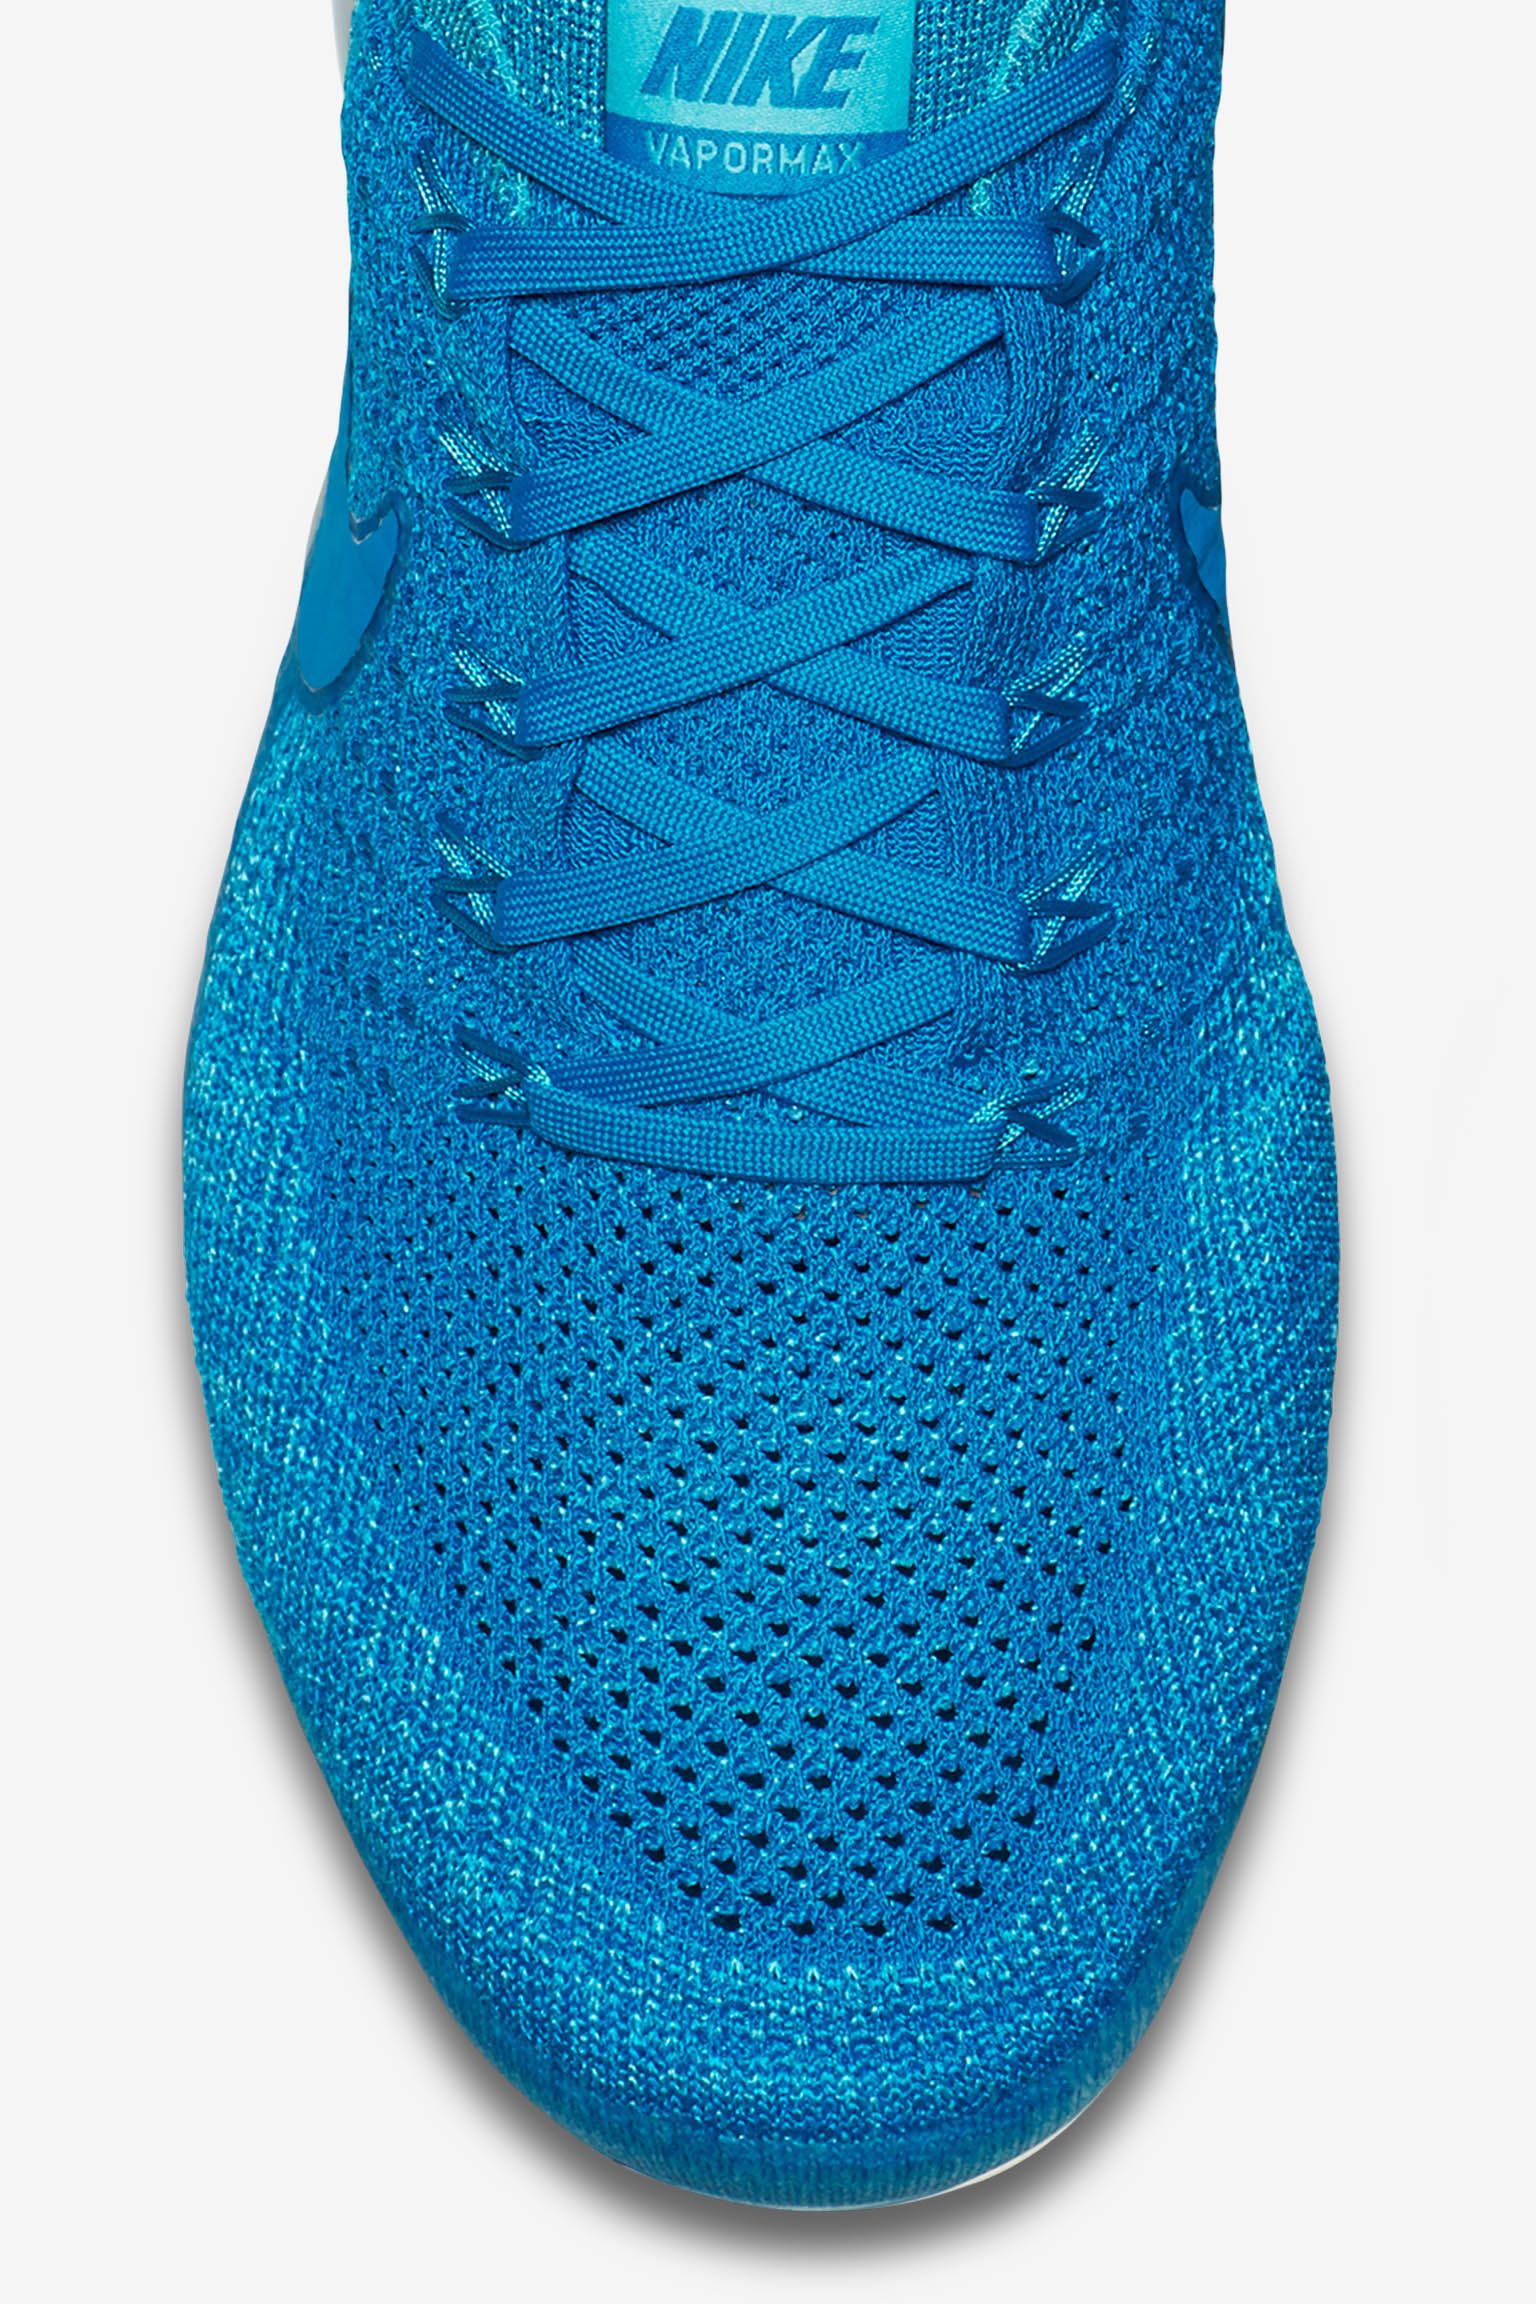 Nike Air VaporMax Day to Night "Blue Orbit". Nike SNKRS ES